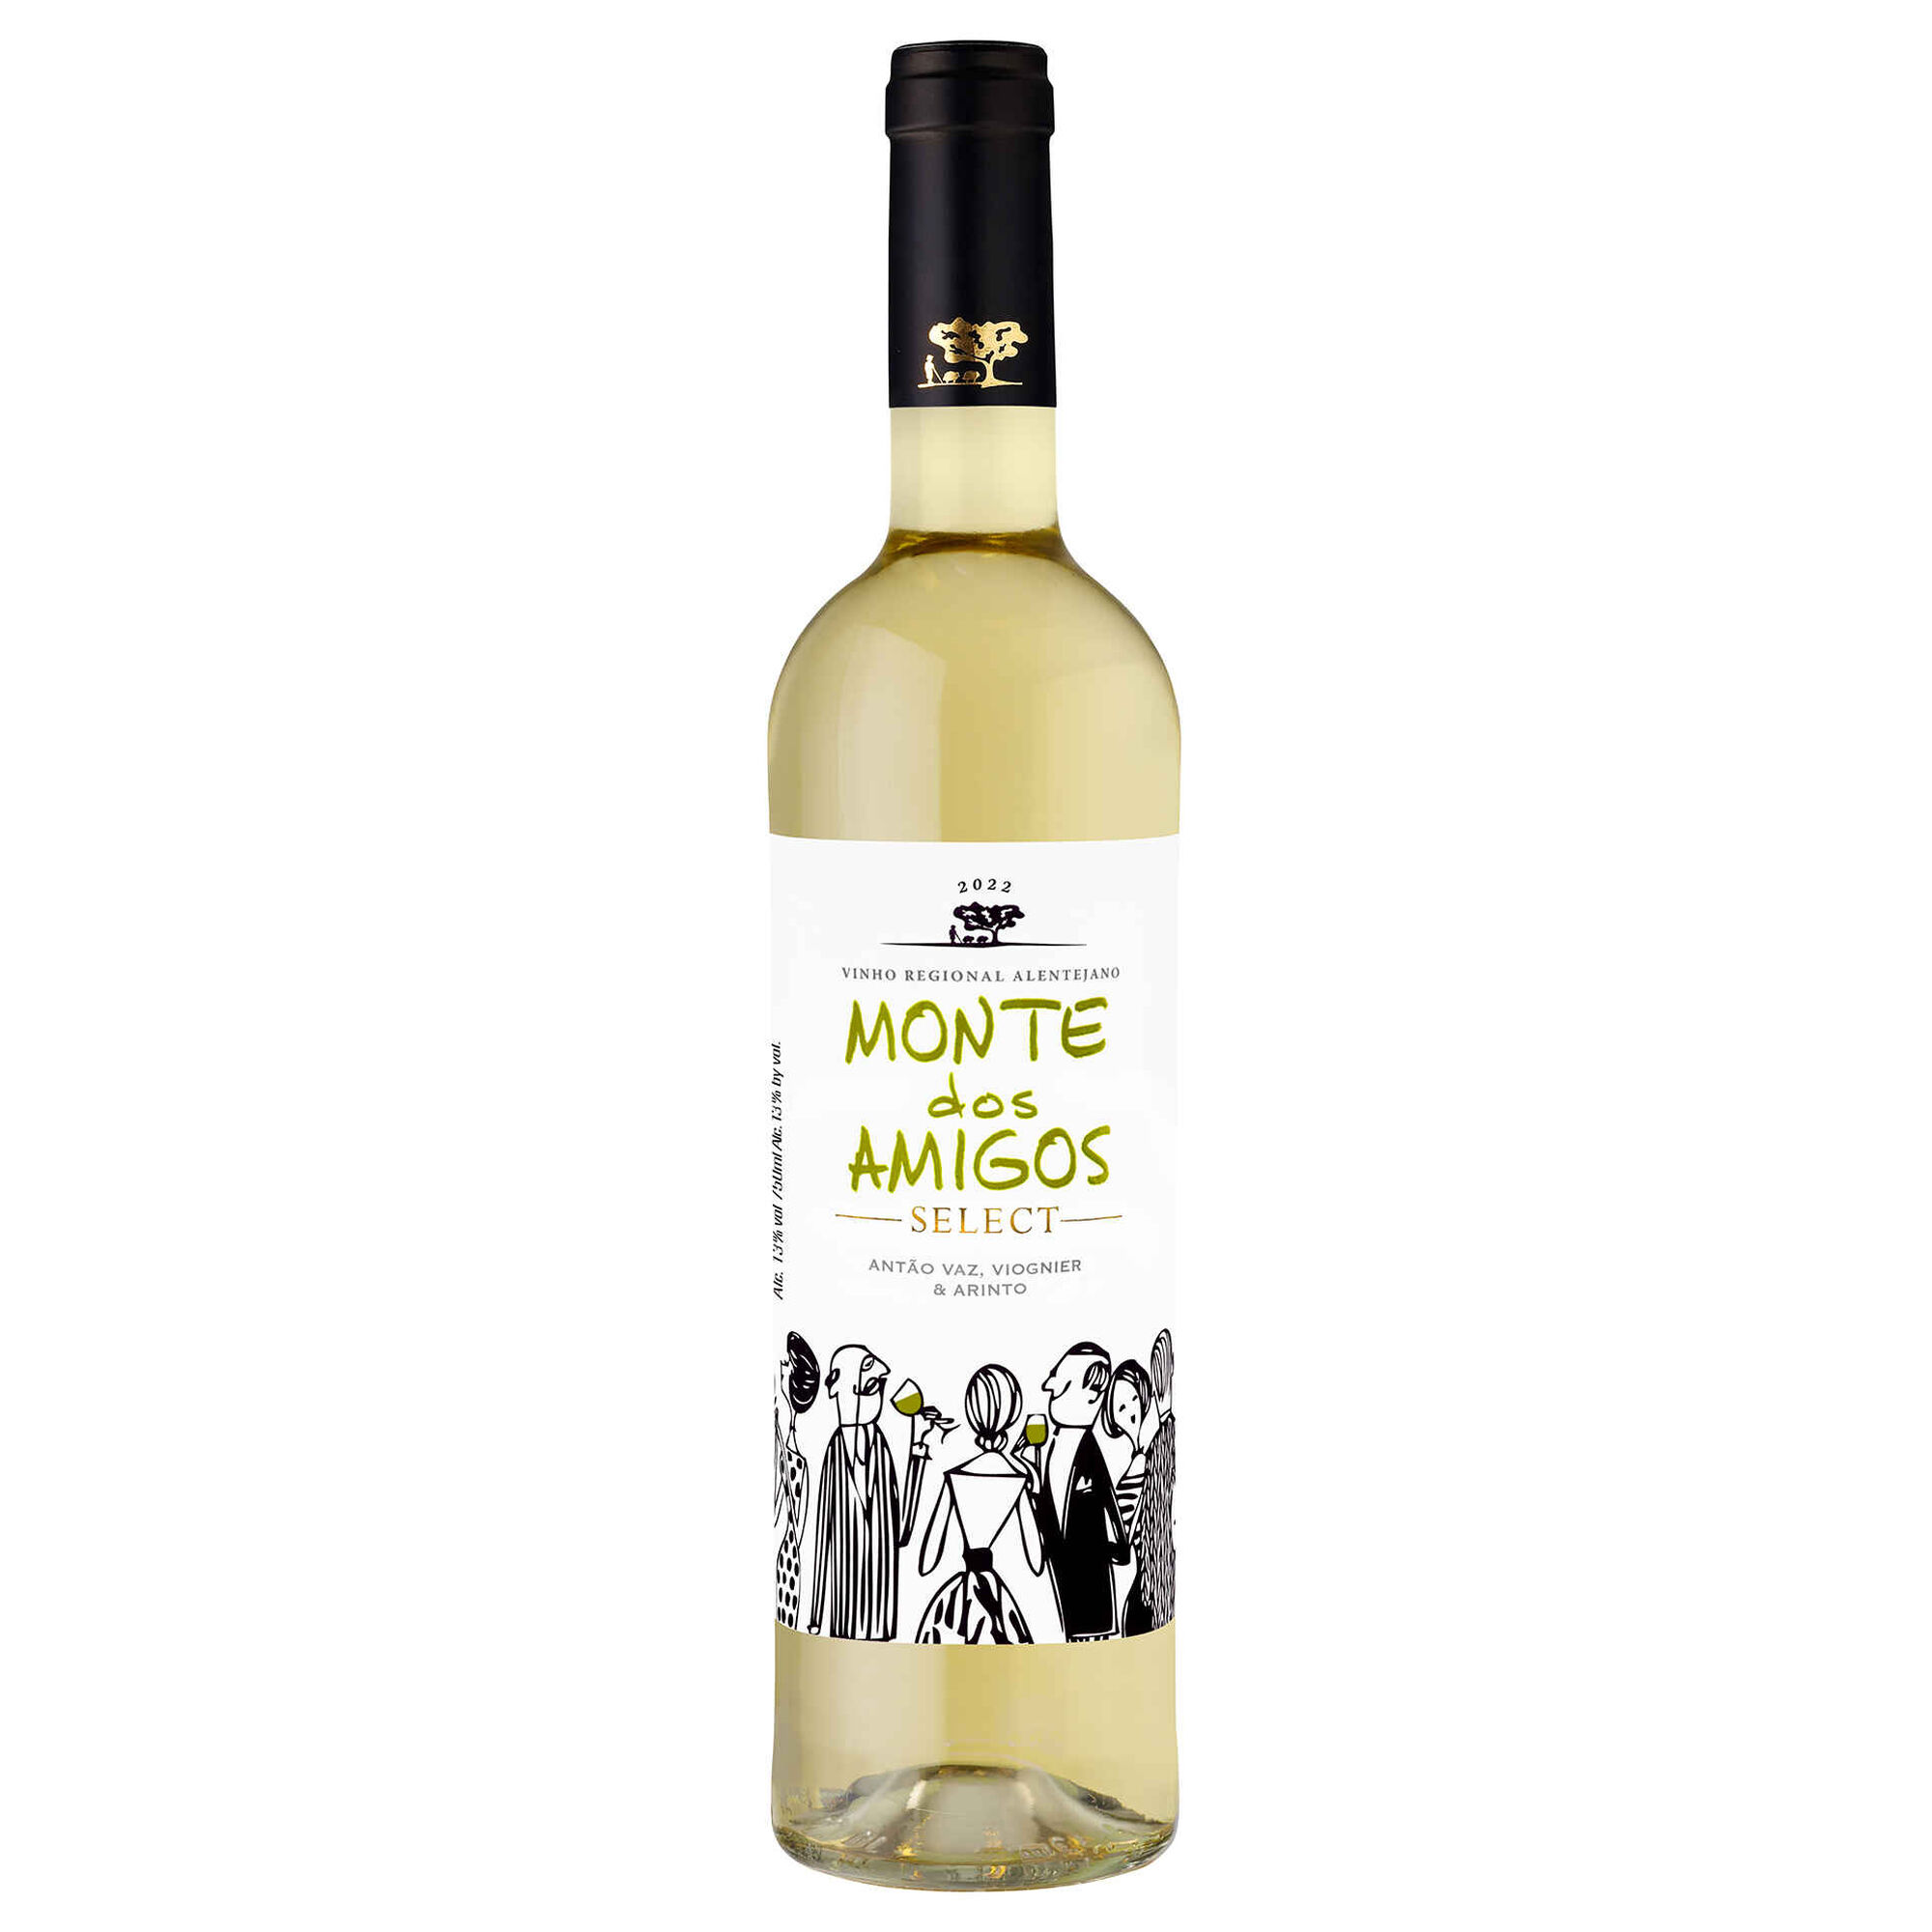 Monte dos Amigos Select Regional Alentejano Vinho Branco